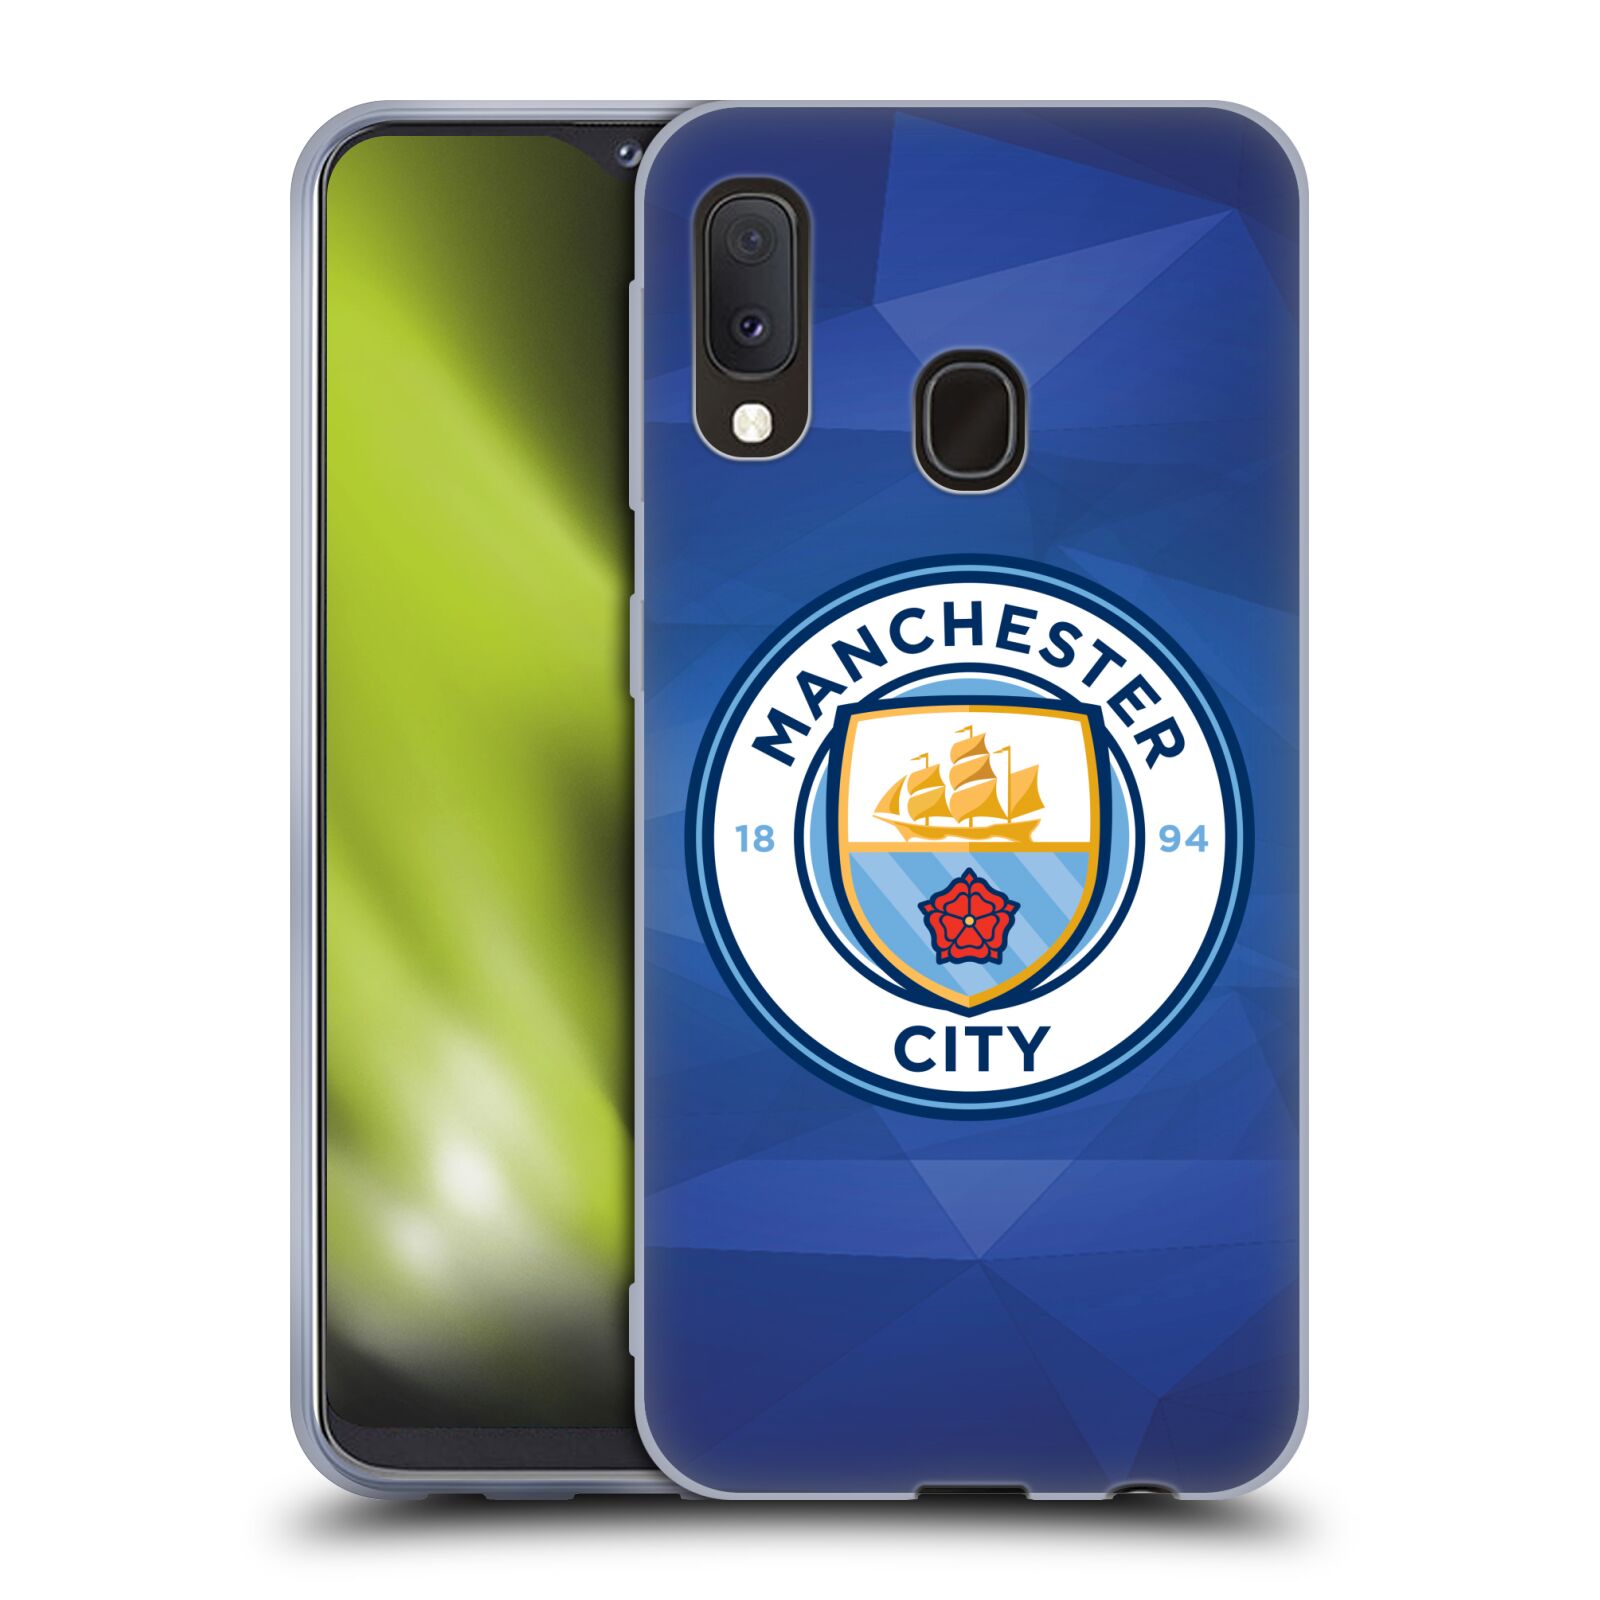 Silikonové pouzdro na mobil Samsung Galaxy A20e - Head Case - Manchester City FC - Modré nové logo (Silikonový kryt, obal, pouzdro na mobilní telefon Samsung Galaxy A20e A202F Dual SIM s motivem Manchester City FC - Modré nové logo)